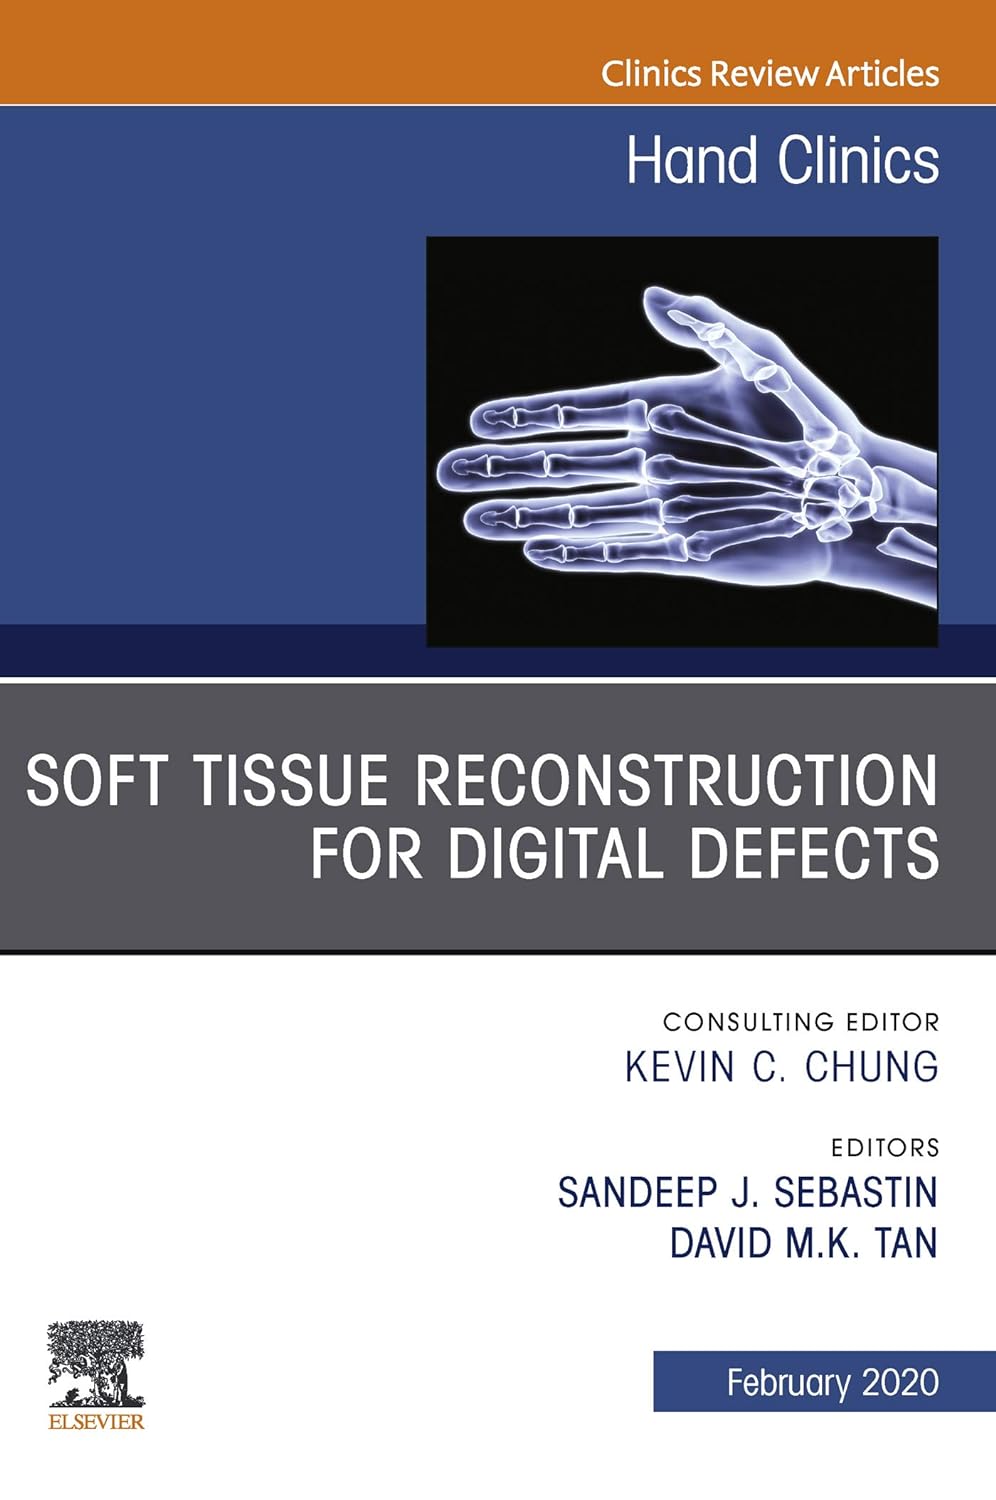 Soft Tissue Reconstruction for Digital Defects, An Issue of Hand Clinics (Volume 36-1) (The Clinics: Orthopedics, Volume 36-1)  by Sandeep J Sebastin 